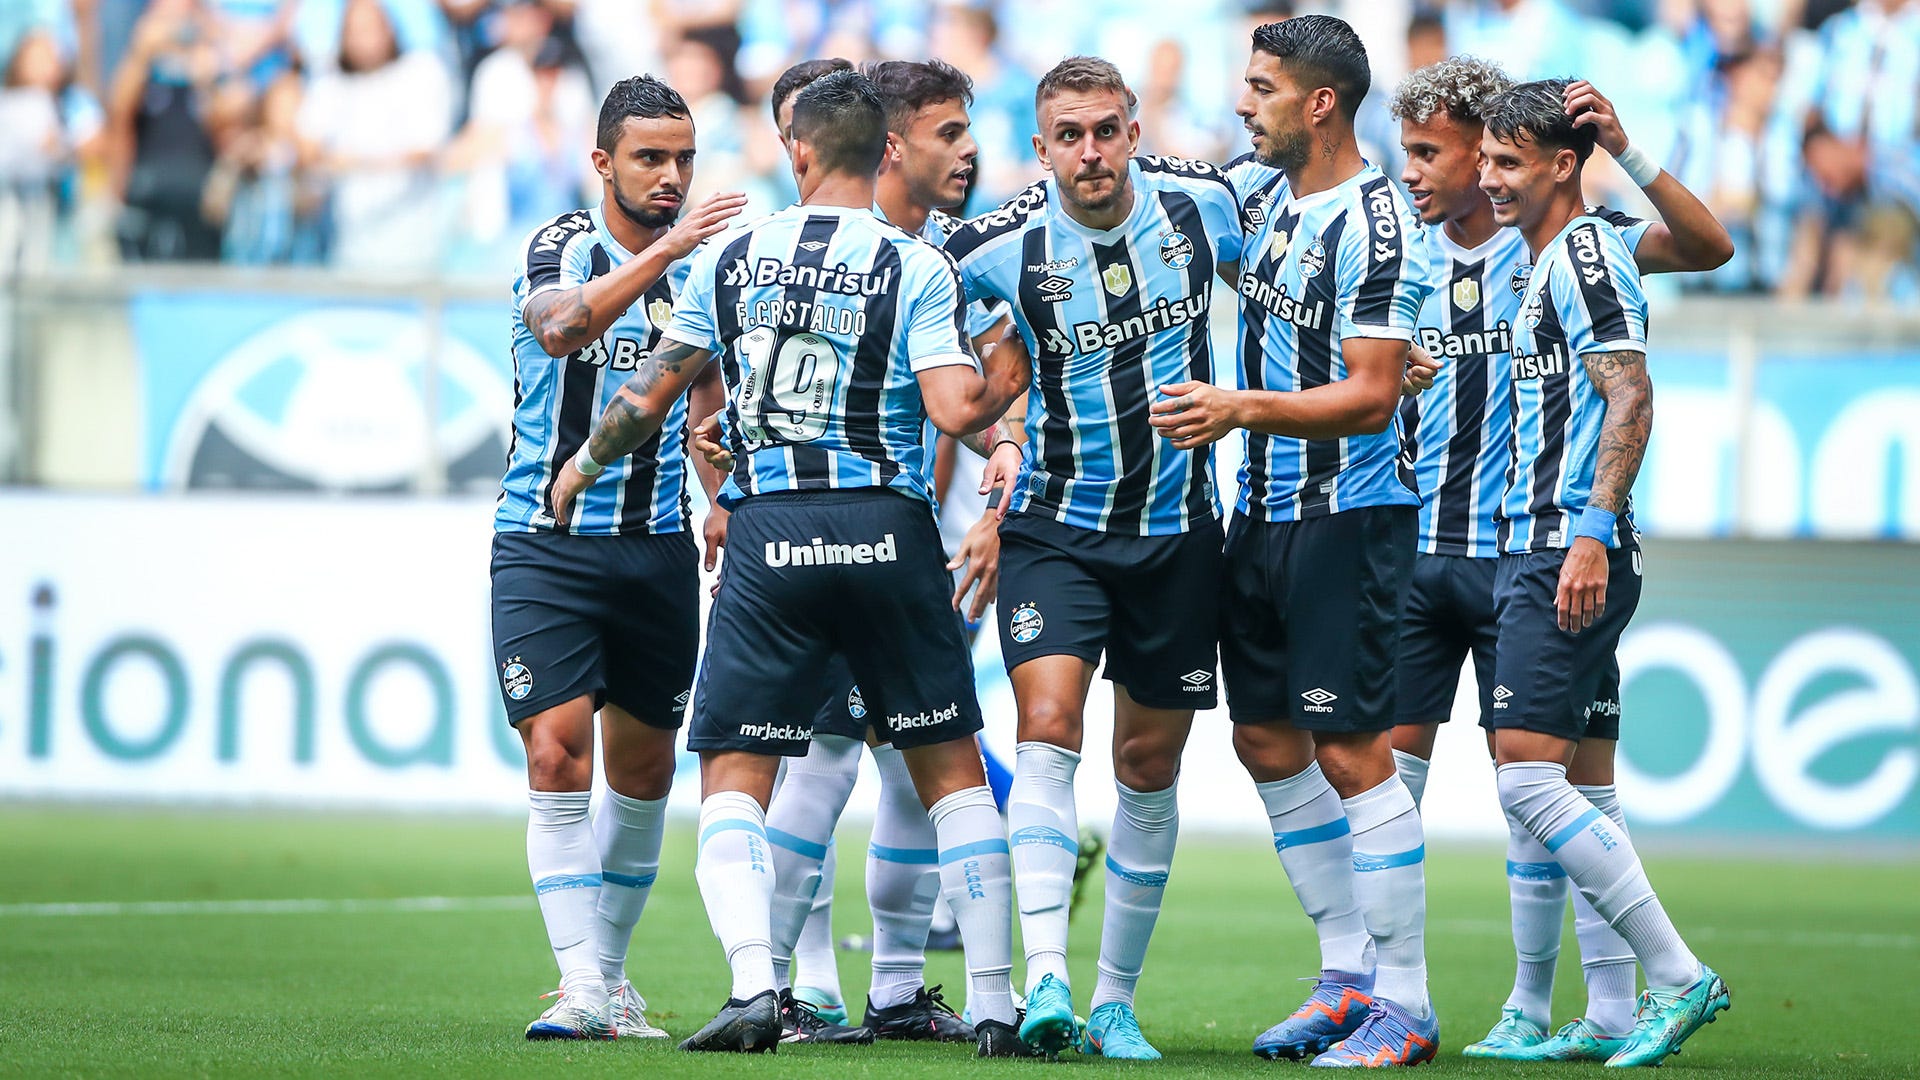 Grêmio vs. Náutico: An Exciting Clash of Brazilian Football